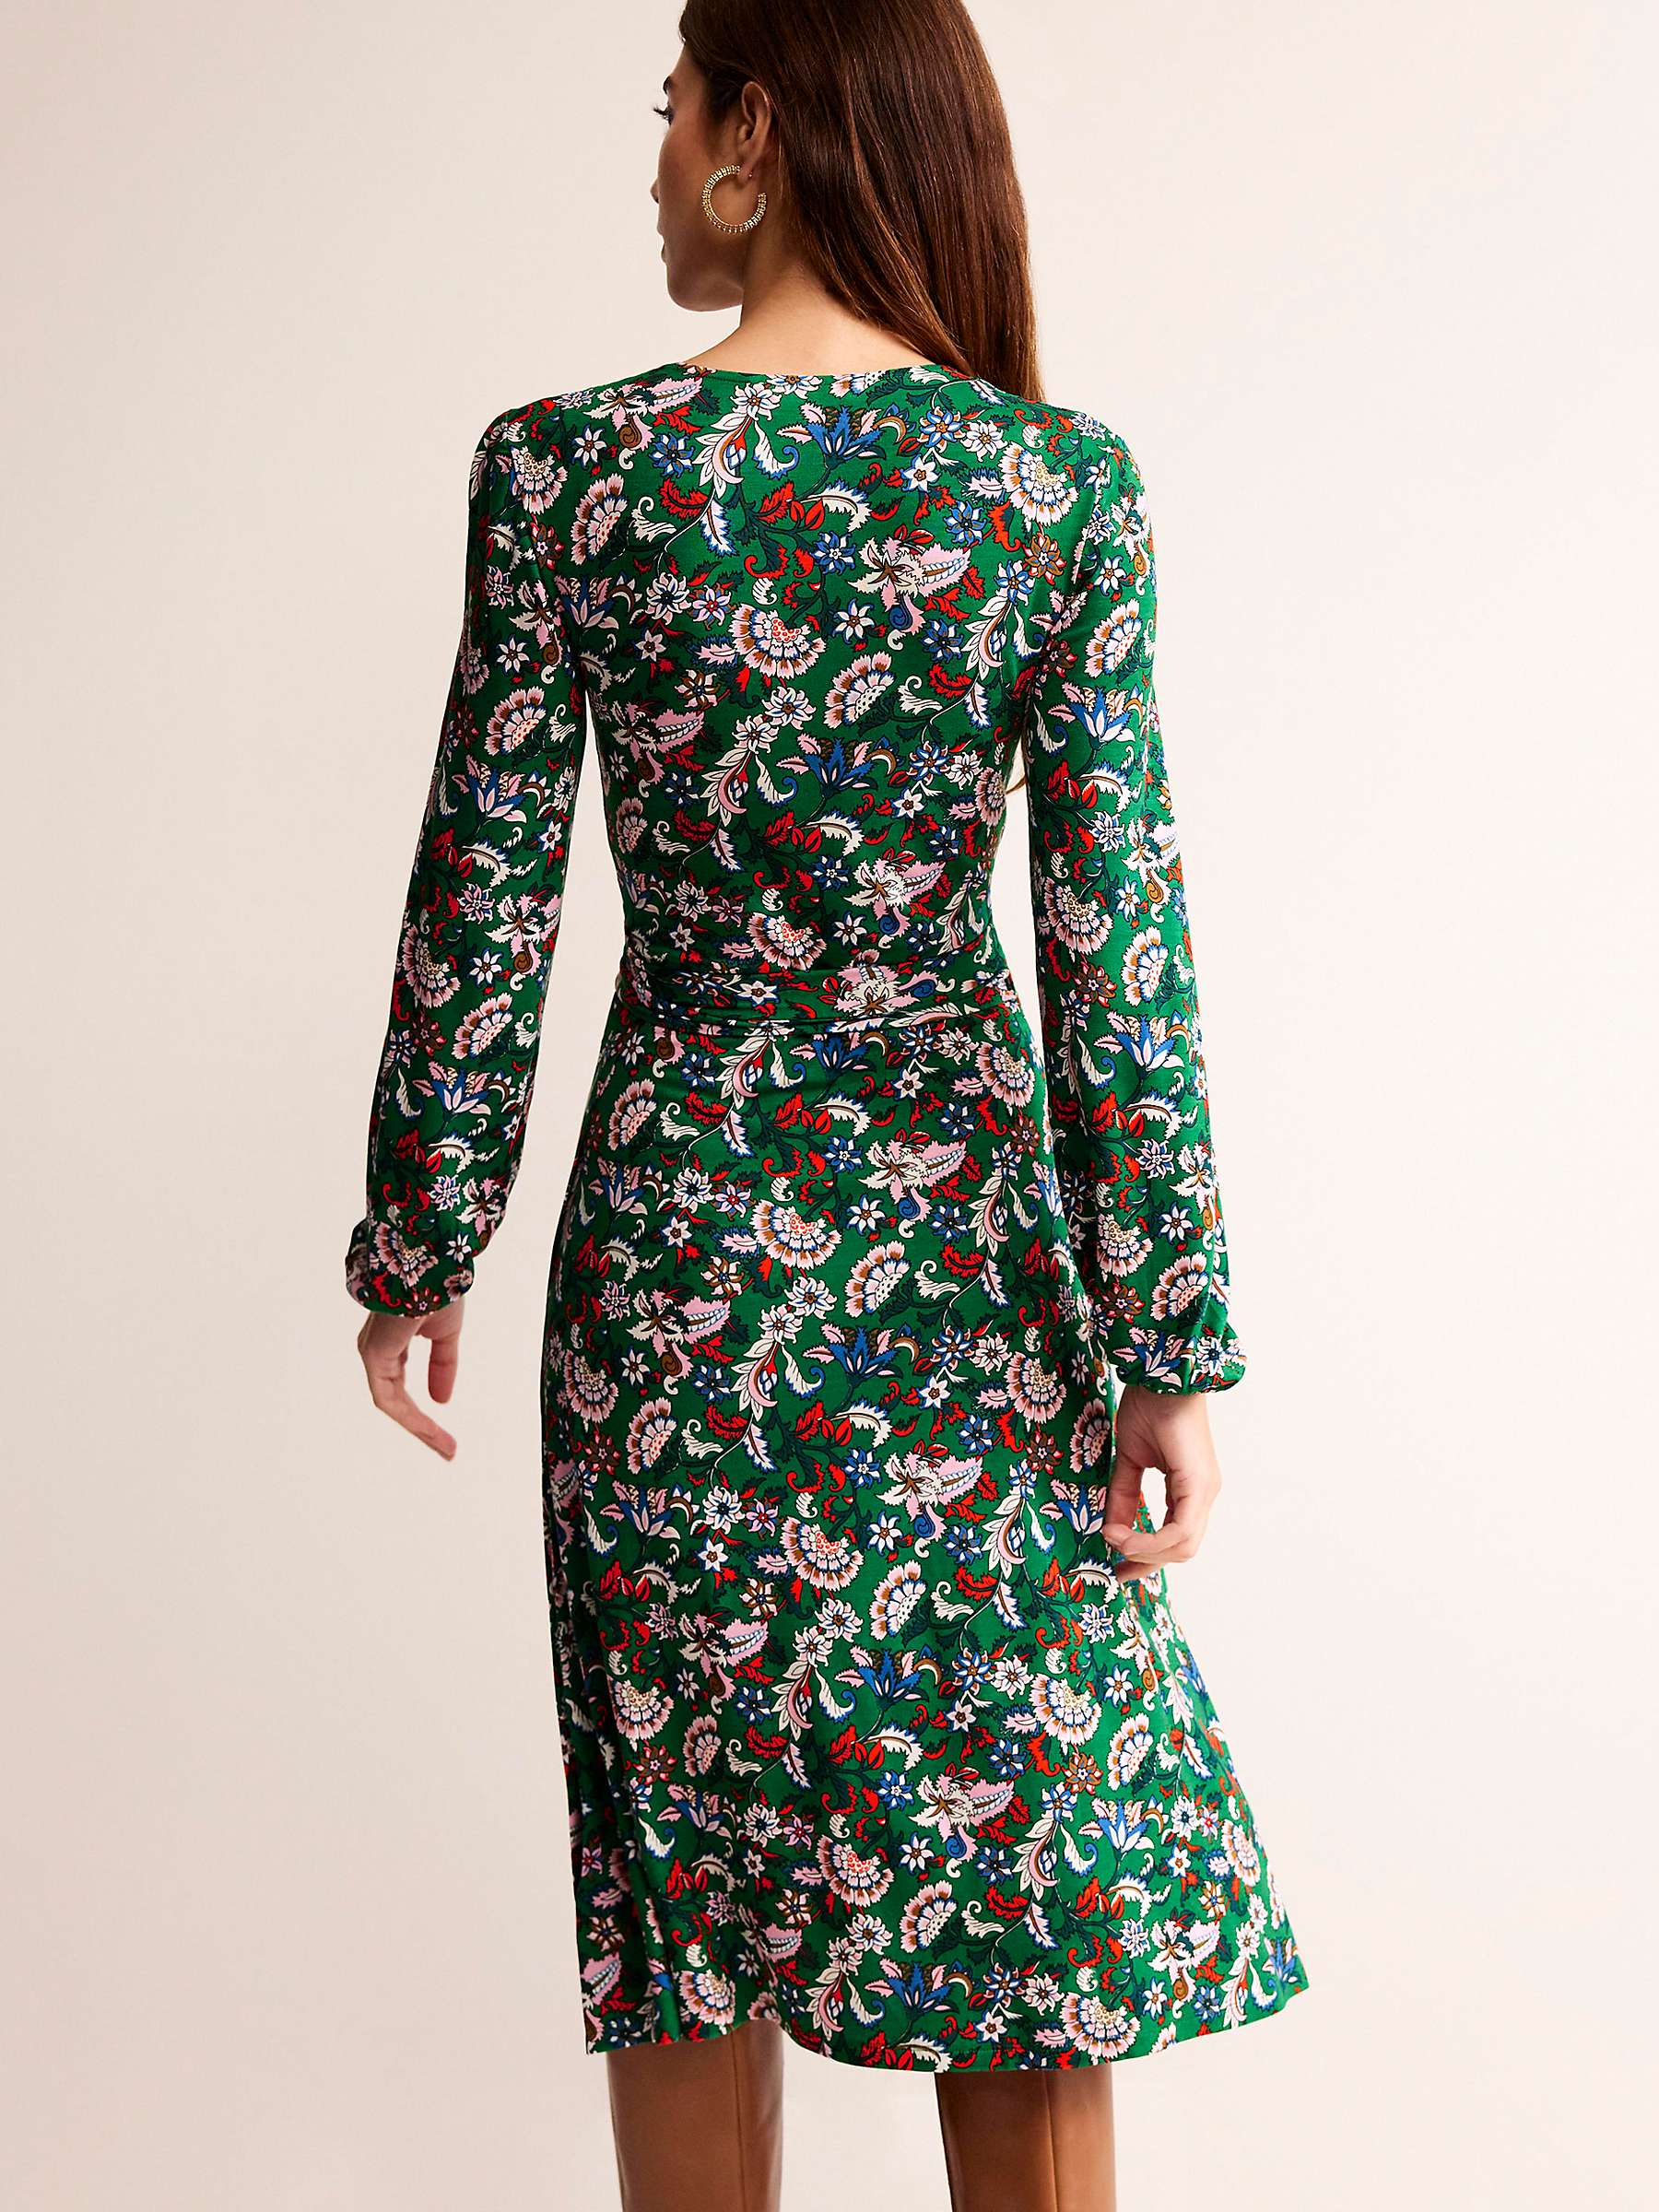 Buy Boden Joanna Ecovero Floral Knee Length Dress, Green/Multi Online at johnlewis.com